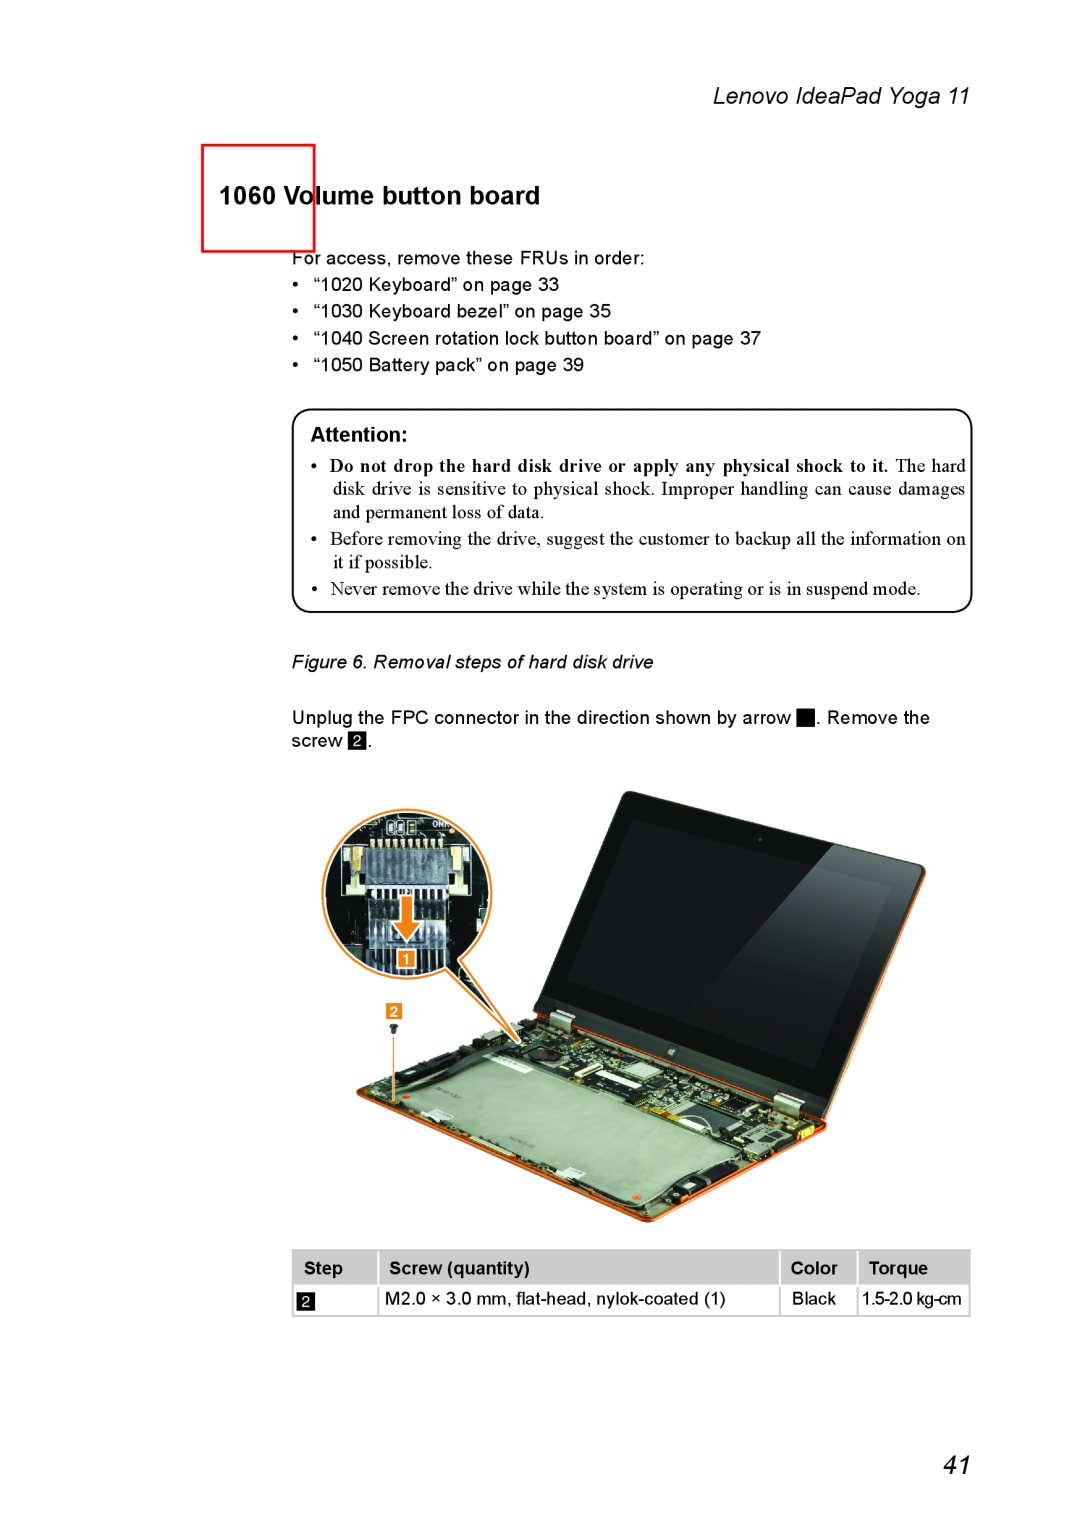 Lenovo 11 manual Volume button board, Removal steps of hard disk drive, Lenovo IdeaPad Yoga 